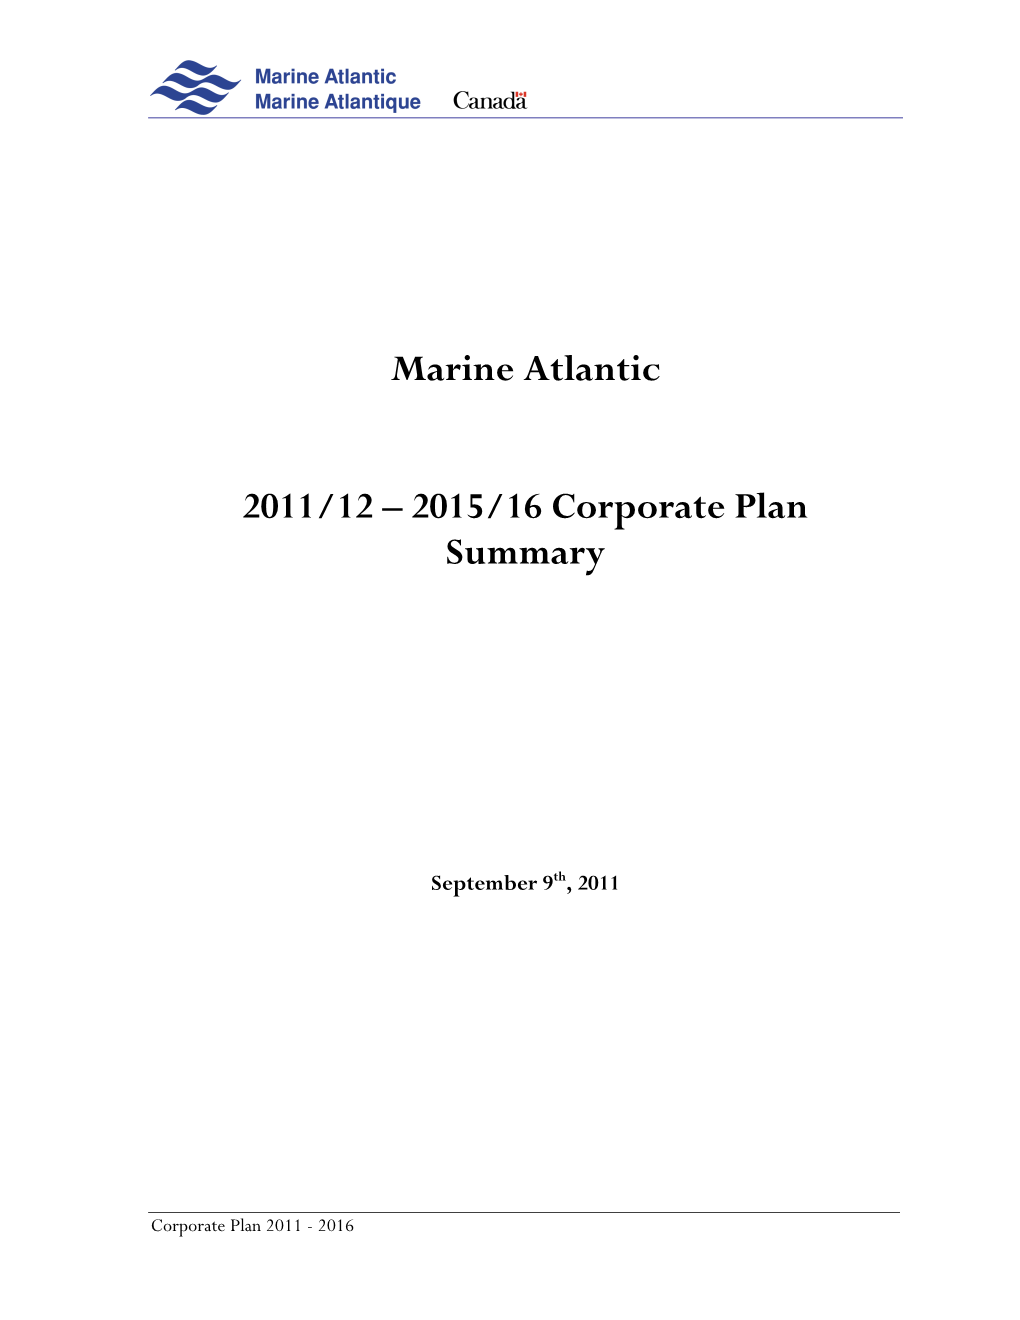 Corporate Plan Summary 2011/12